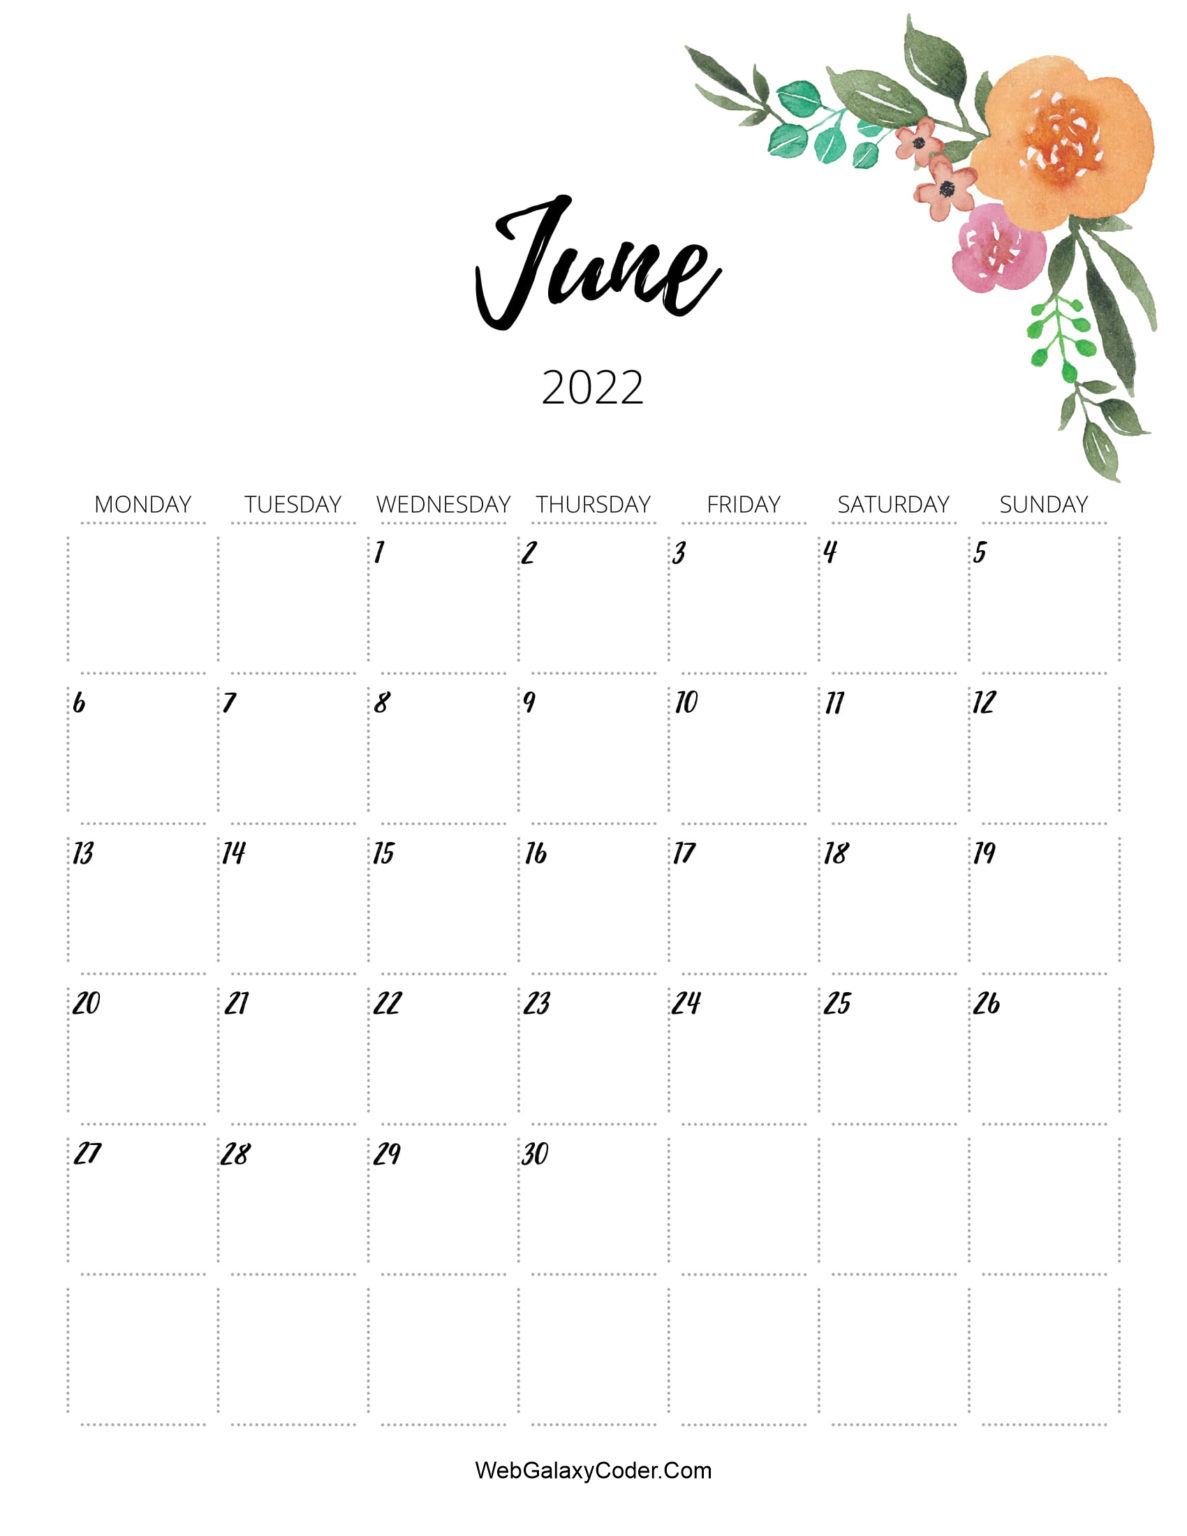 Get 2022 Calendar For June